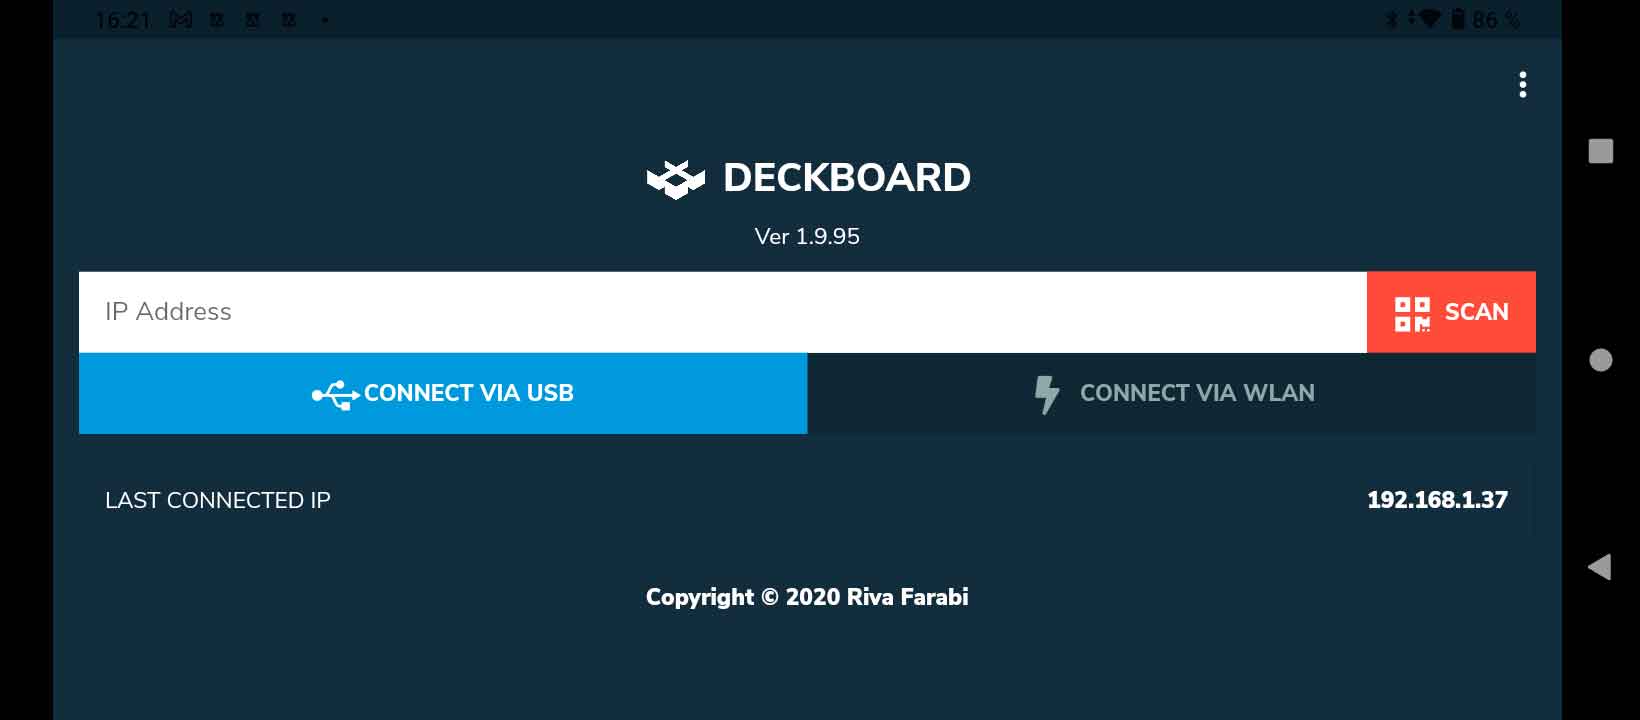 Deckboard: an economical alternative to Stream Deck